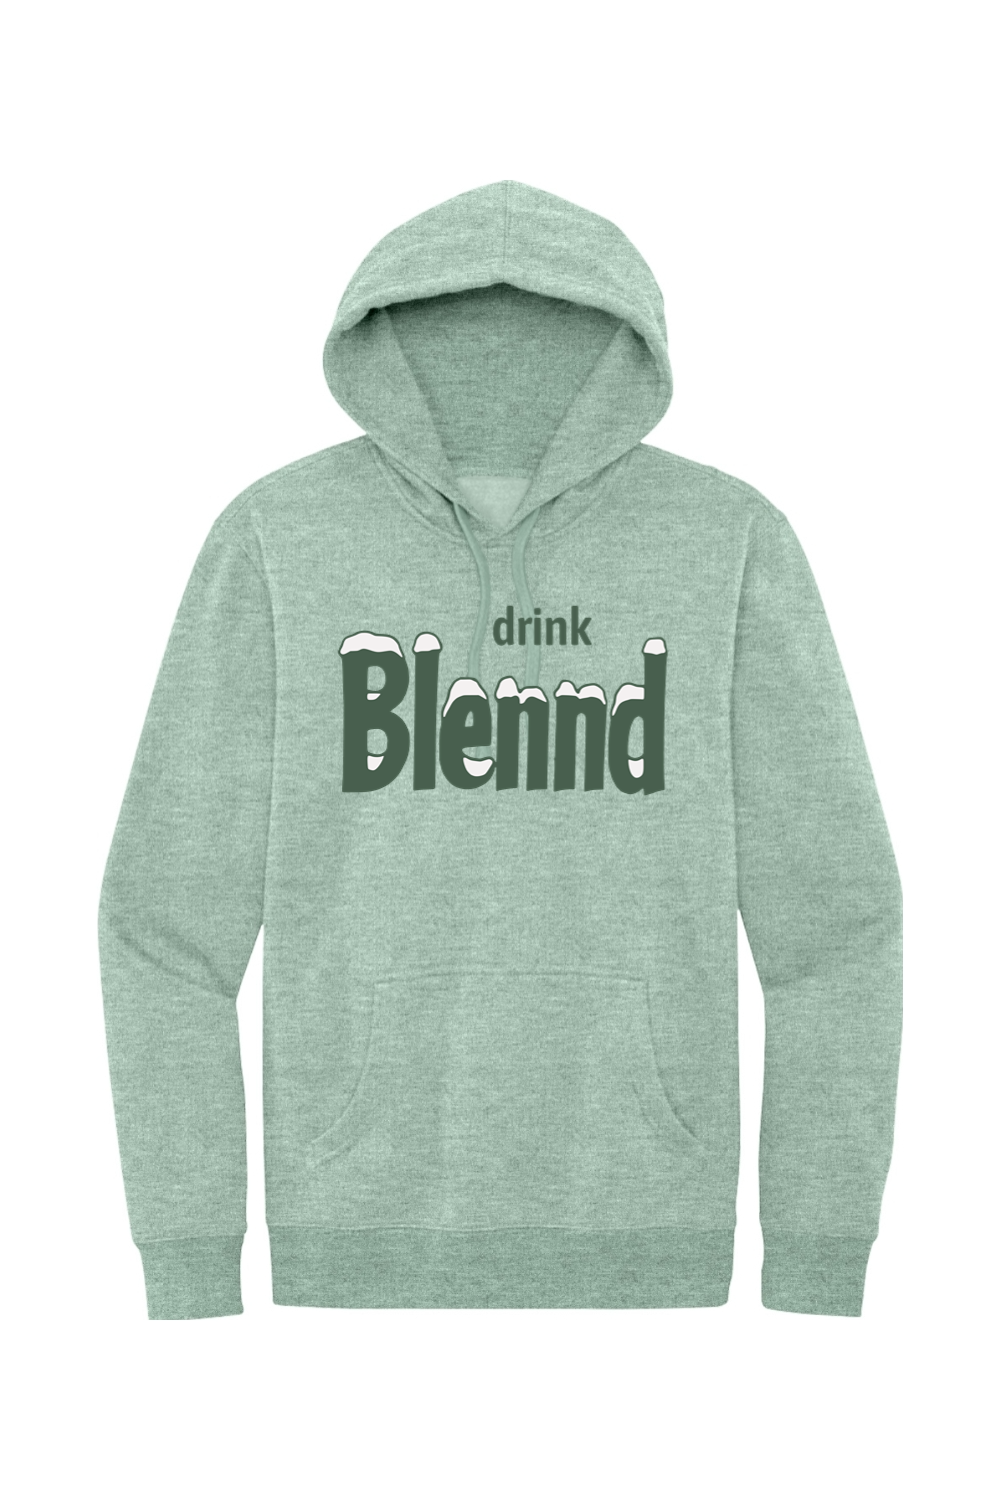 Drink Blennd - Fleece Hoodie - Yinzylvania